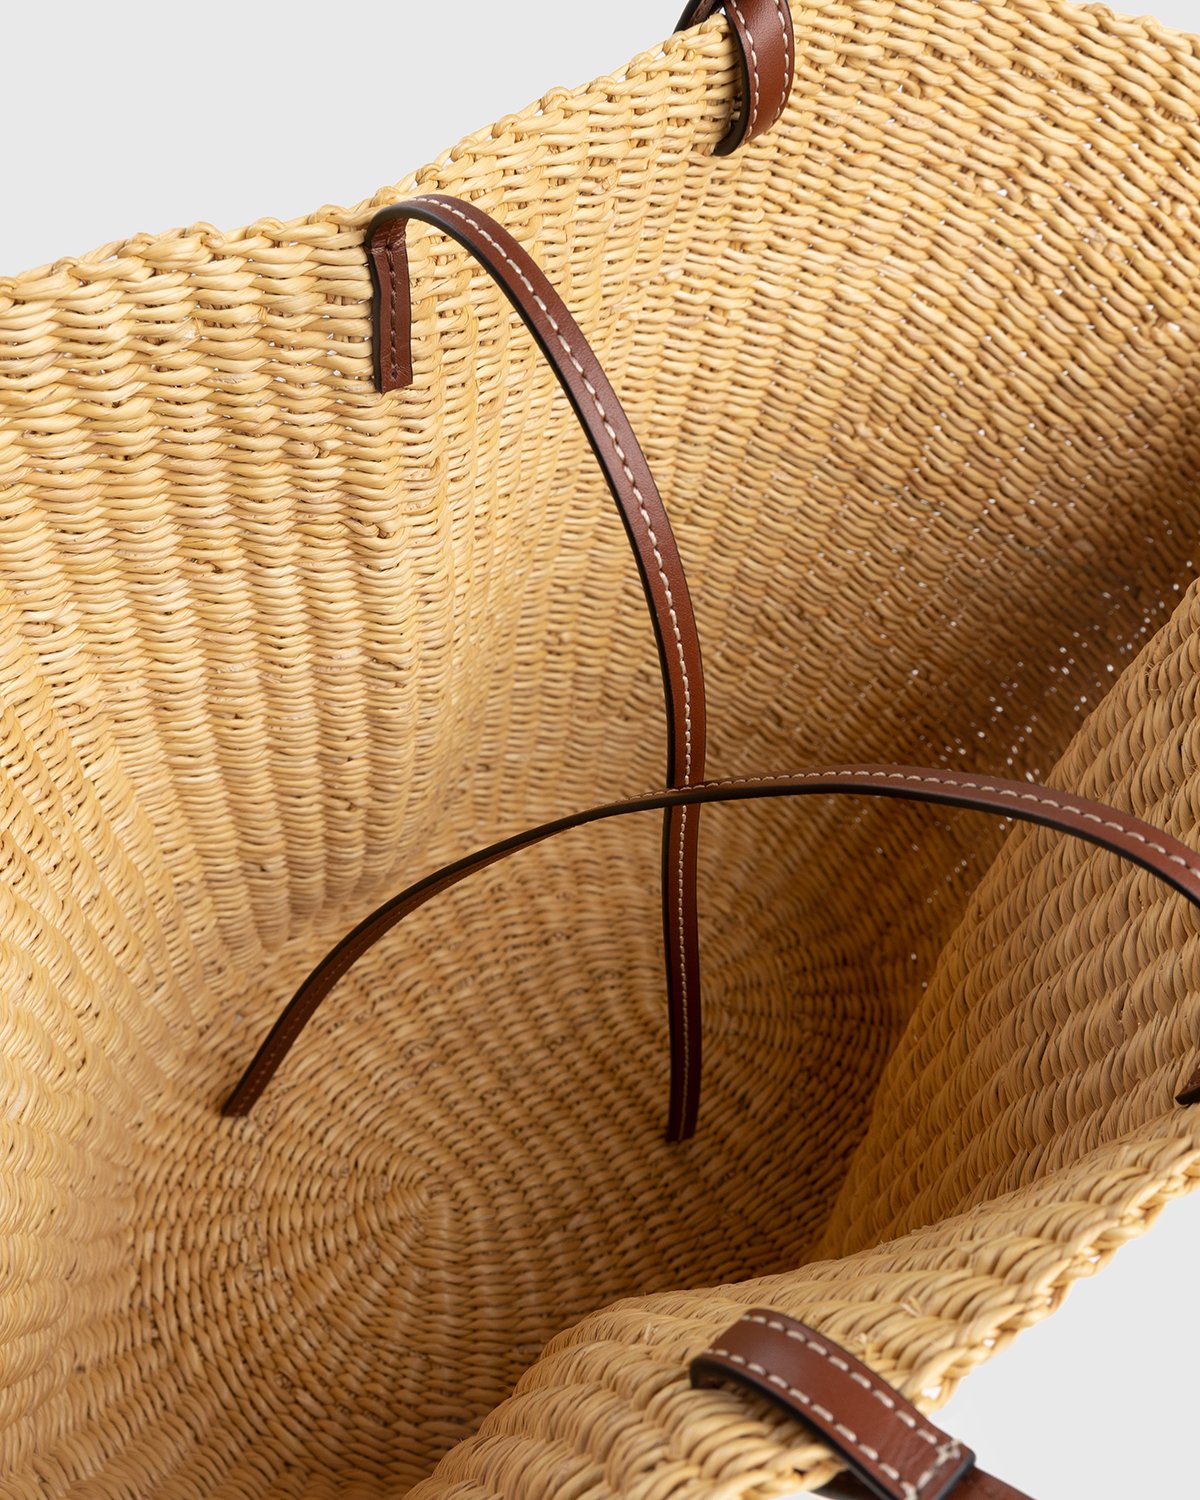 Loewe - Paula's Ibiza Small Shell Basket Bag Natural/Pecan - Accessories - Beige - Image 3